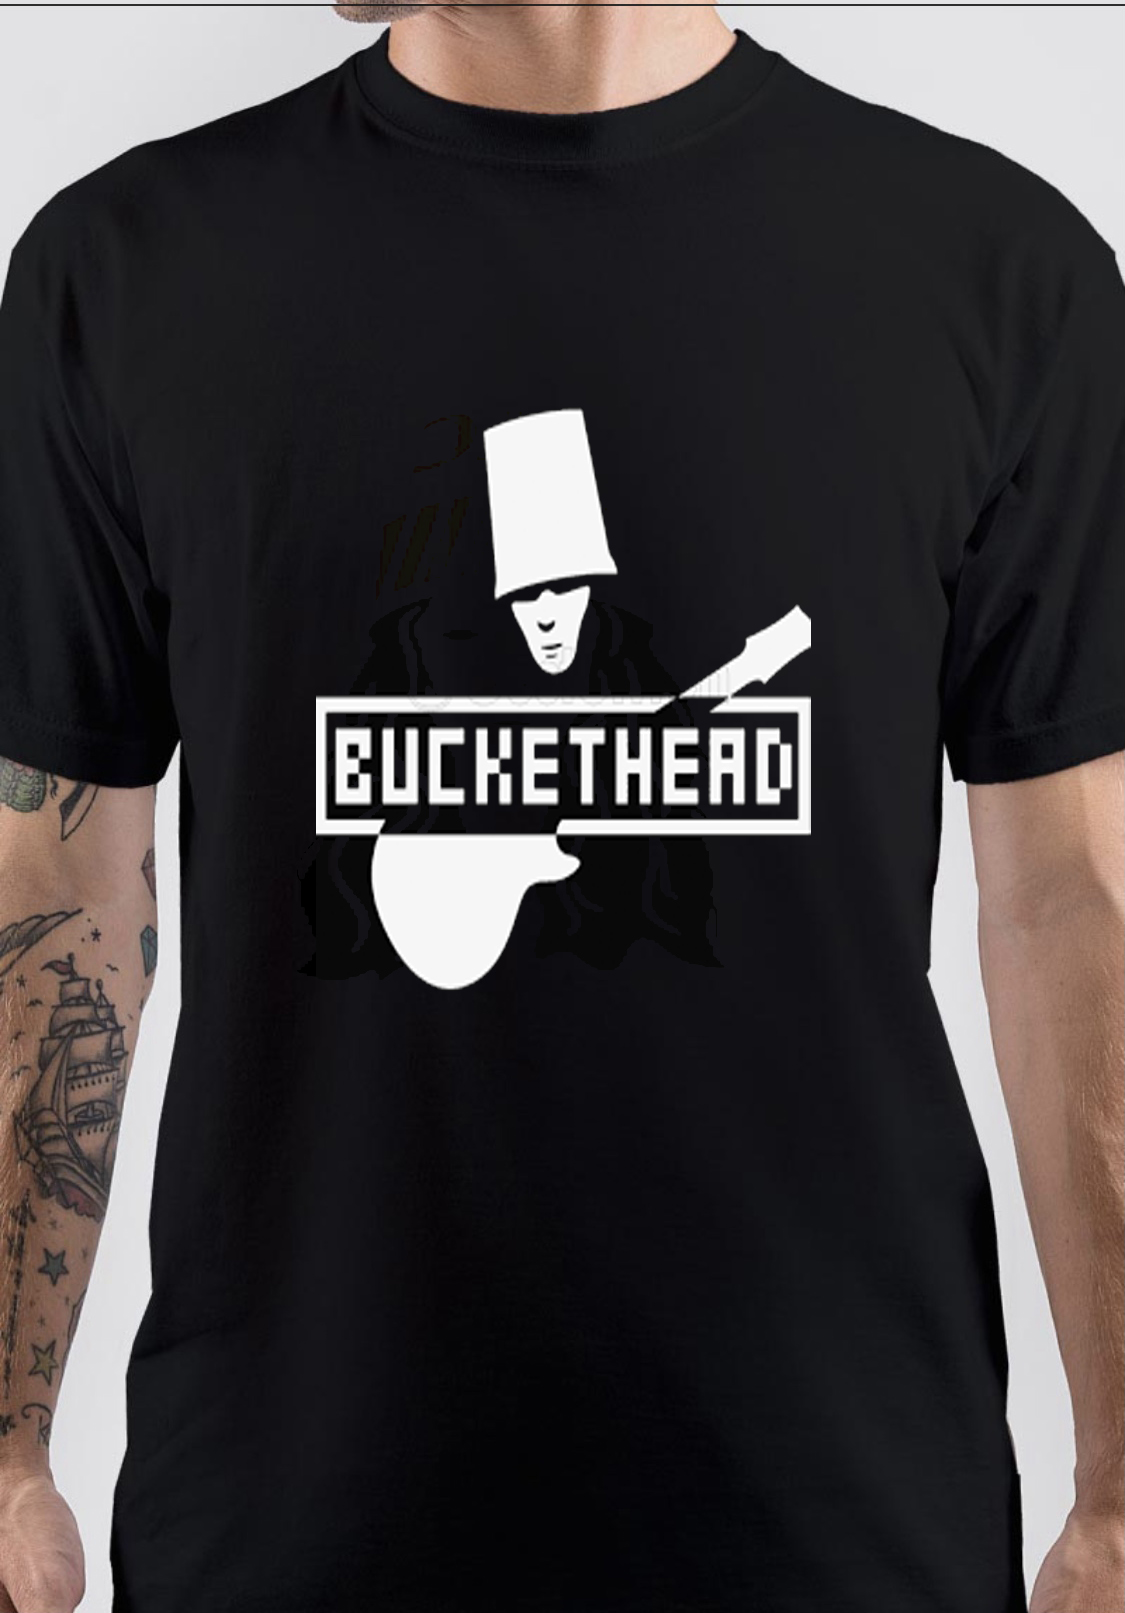 Buckethead T-Shirt And Merchandise